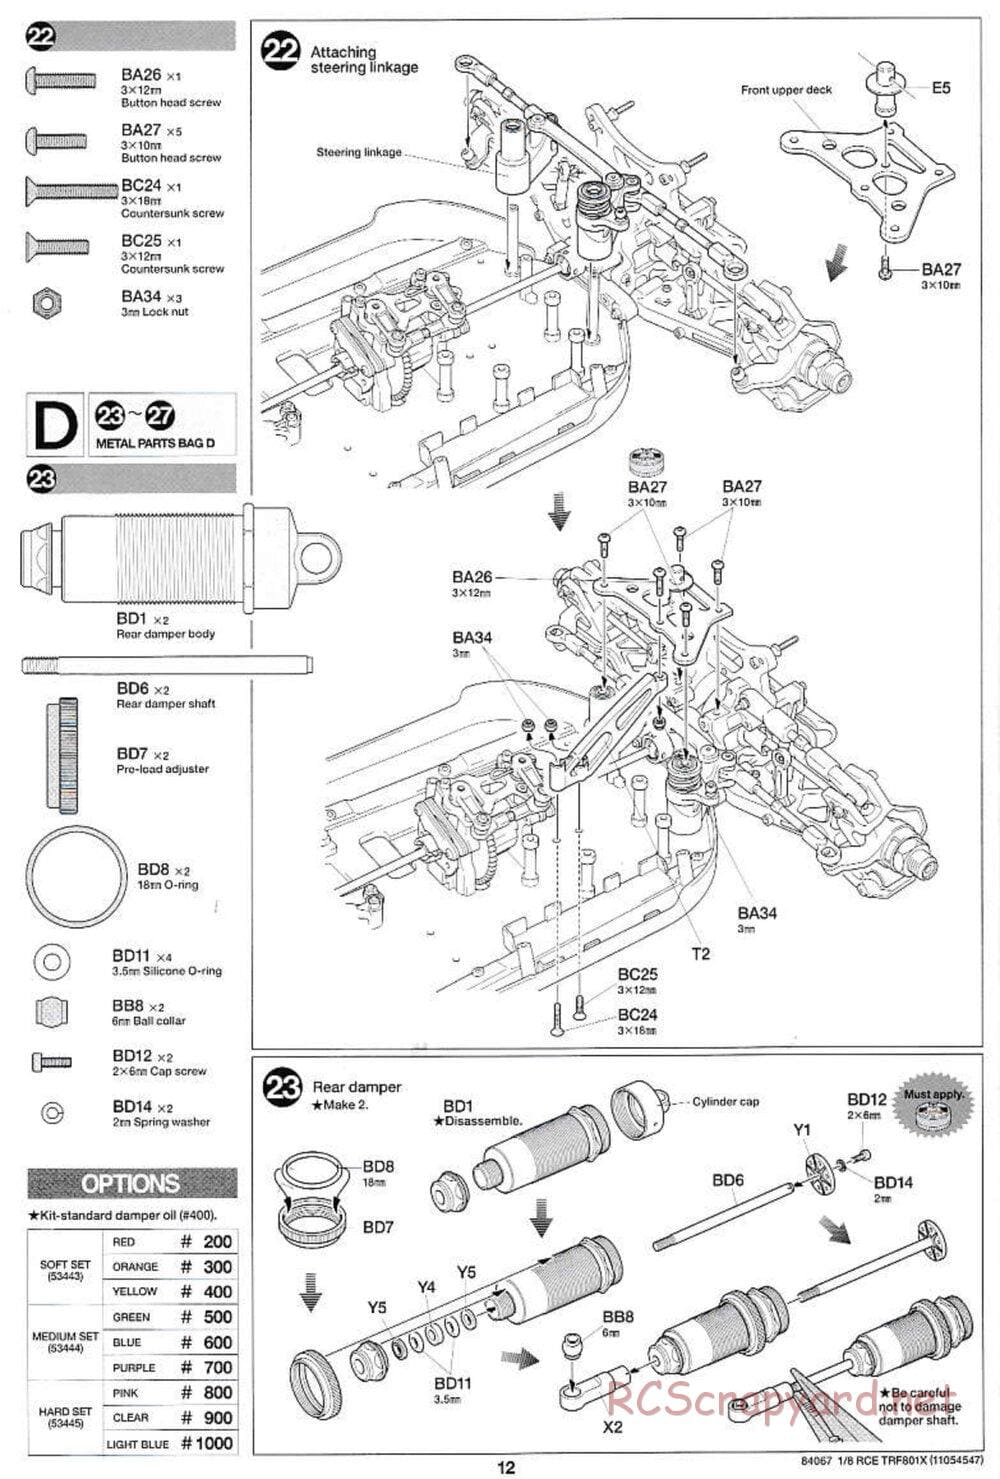 Tamiya - TRF801X Chassis - Manual - Page 12